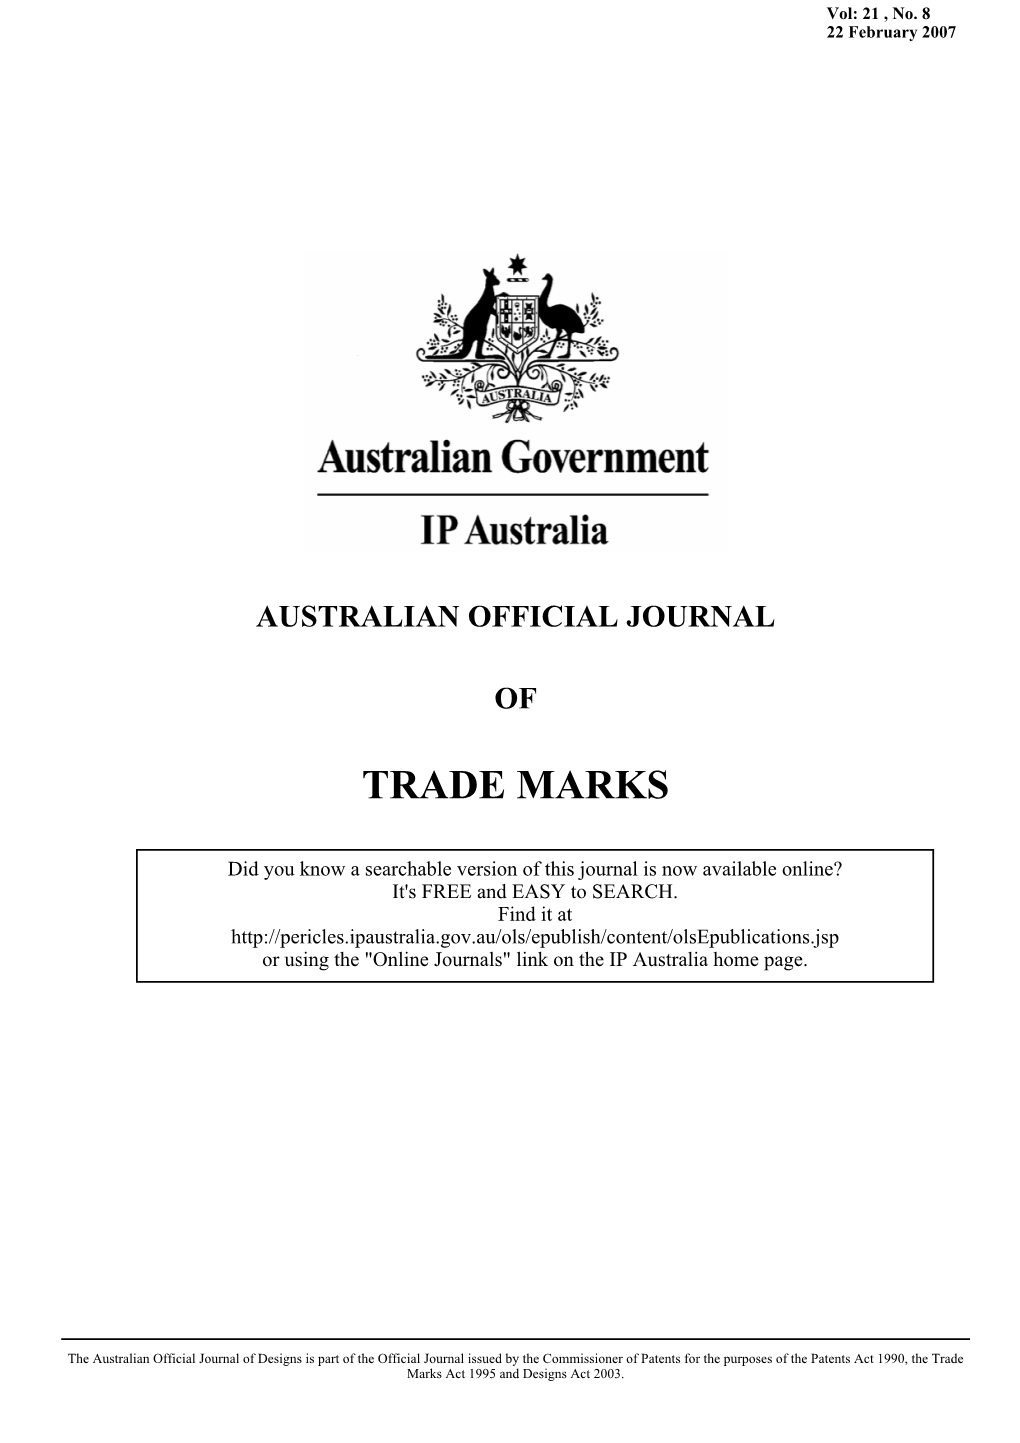 AUSTRALIAN OFFICIAL JOURNAL of TRADE MARKS 22 February 2007